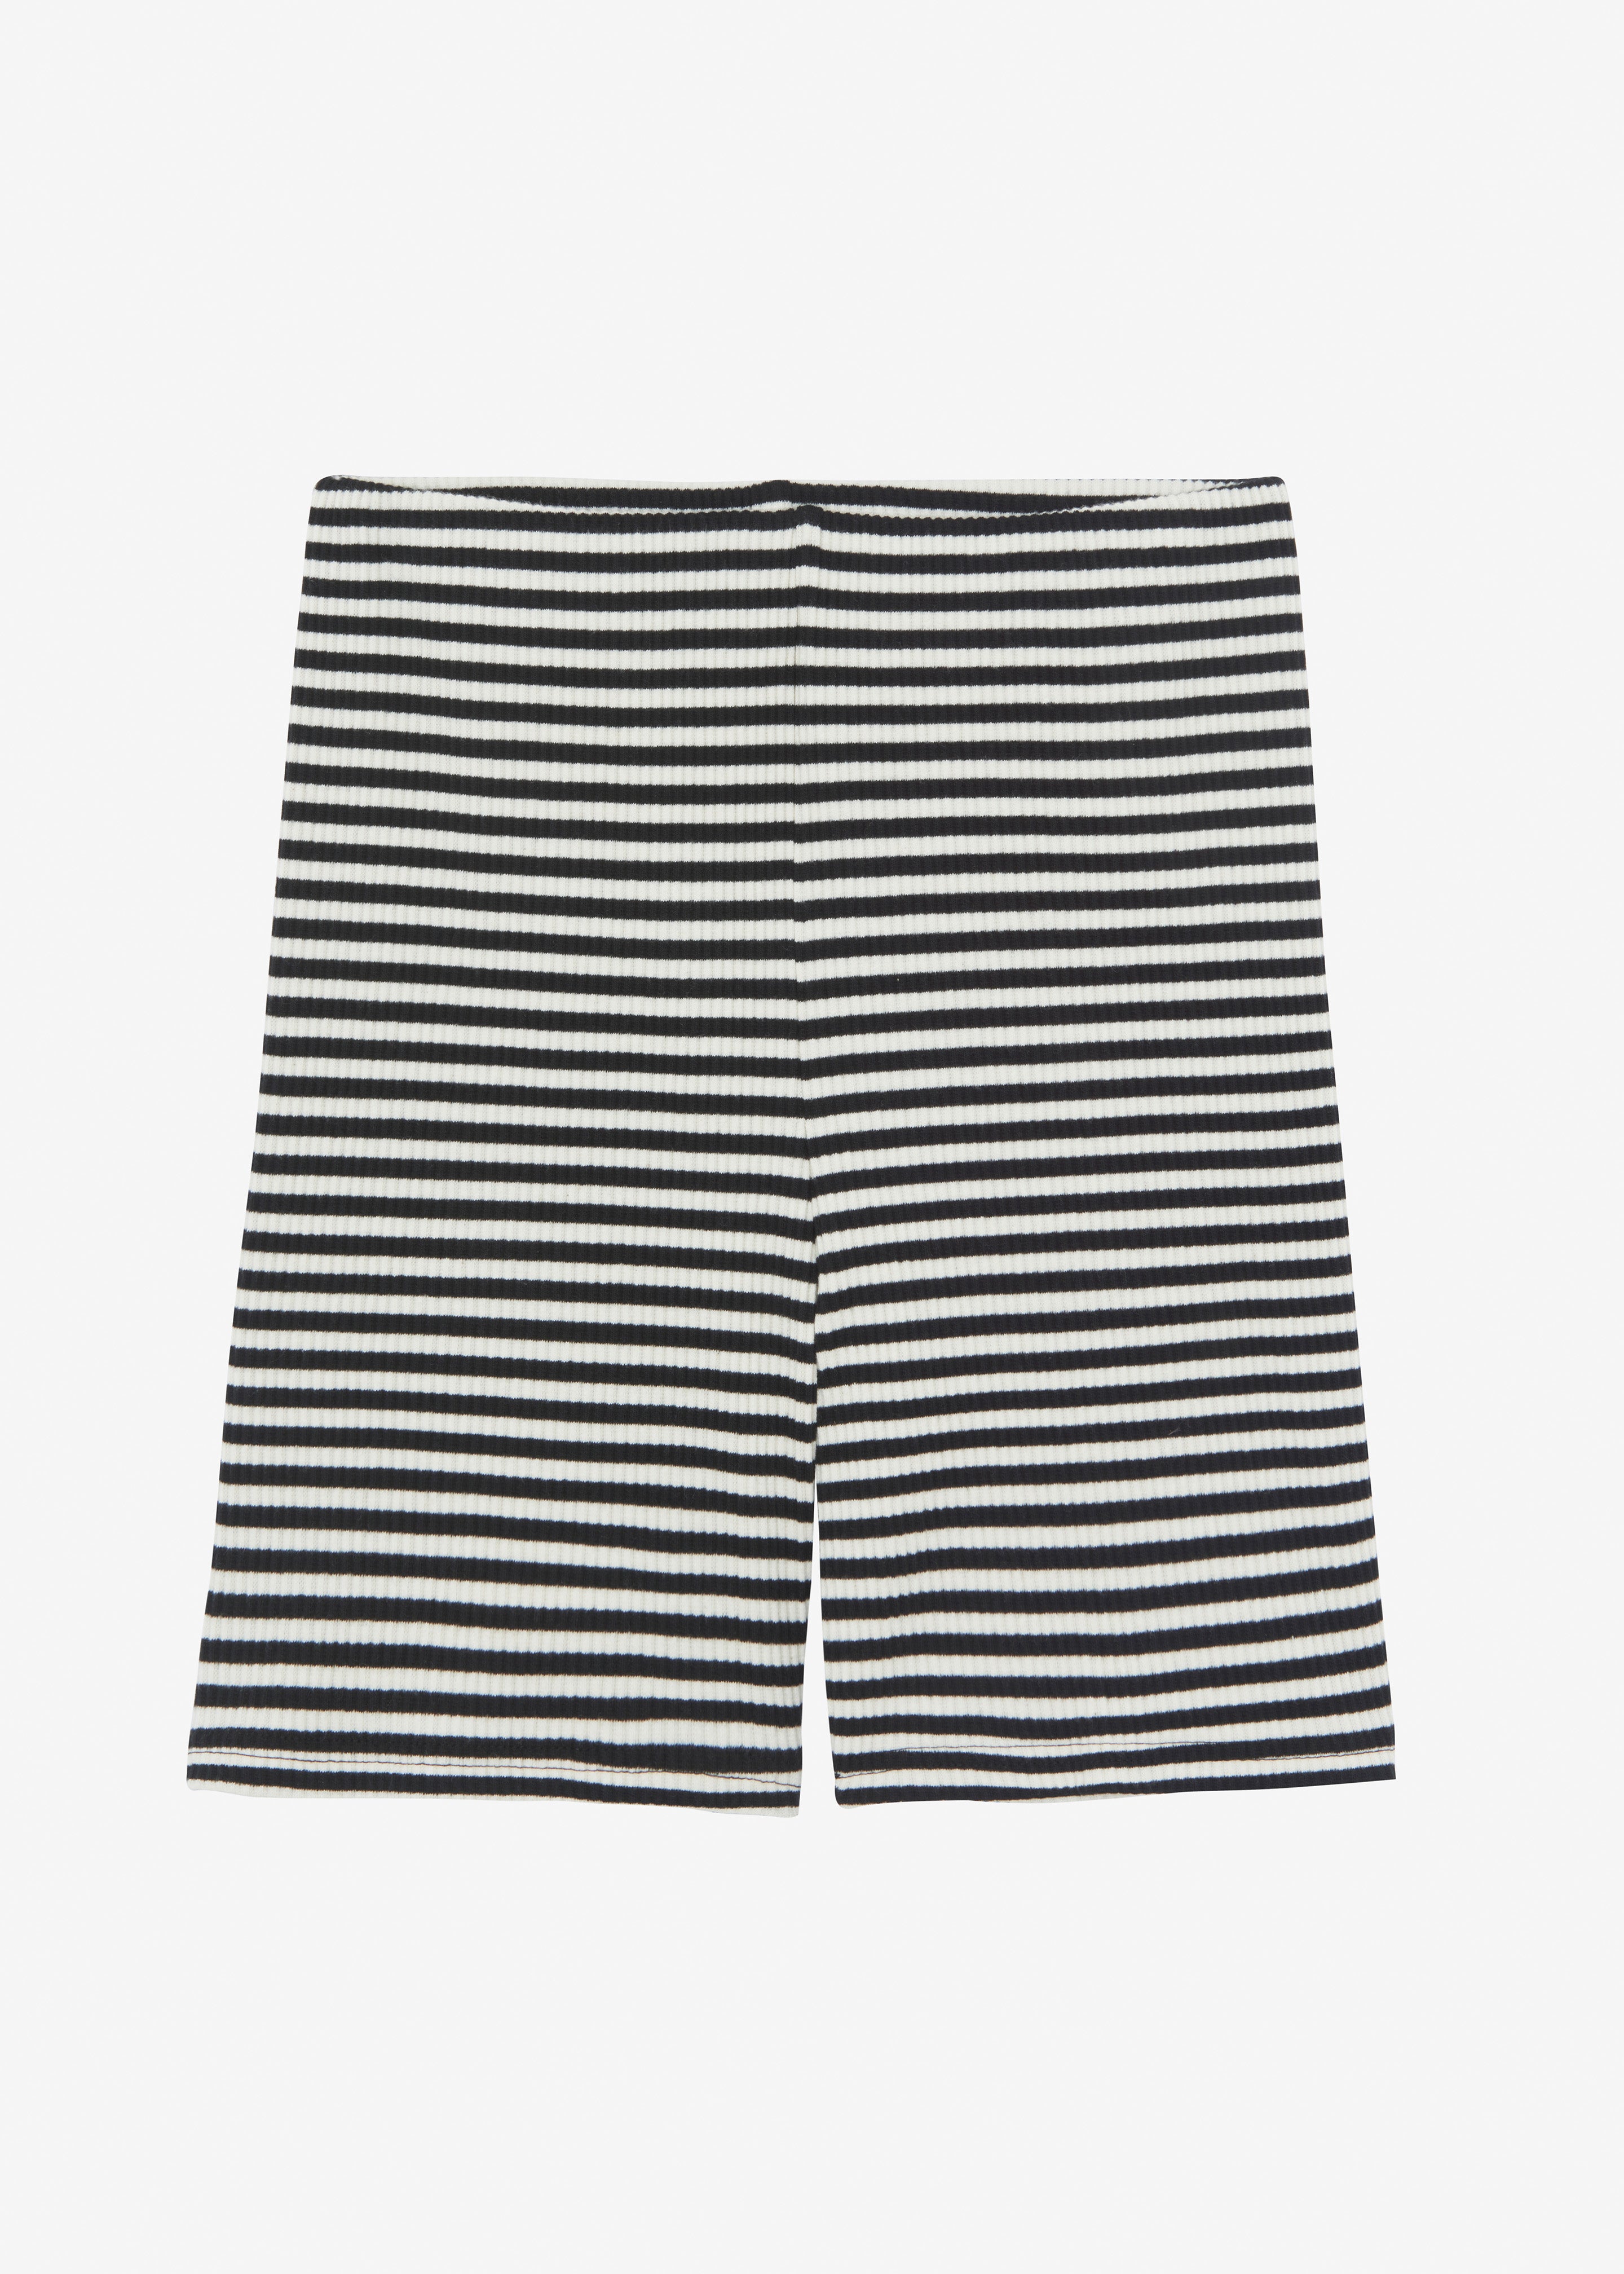 Martina Knit Shorts - Black Stripe - 10